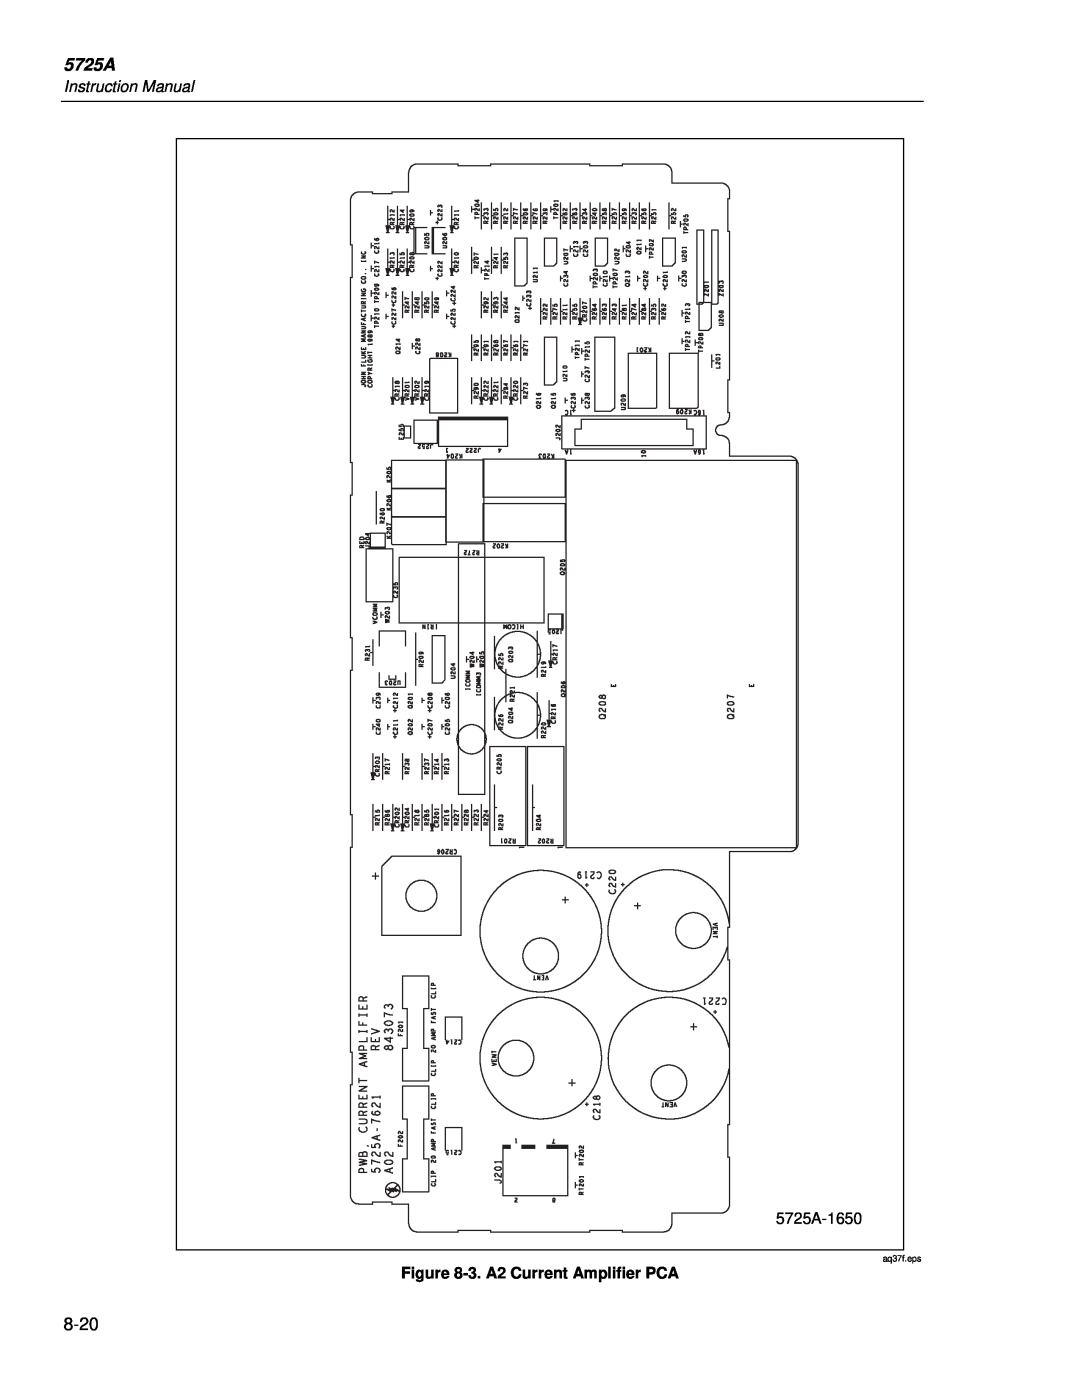 Fluke instruction manual 5725A-1650, 3.A2 Current Amplifier PCA, aq37f.eps 